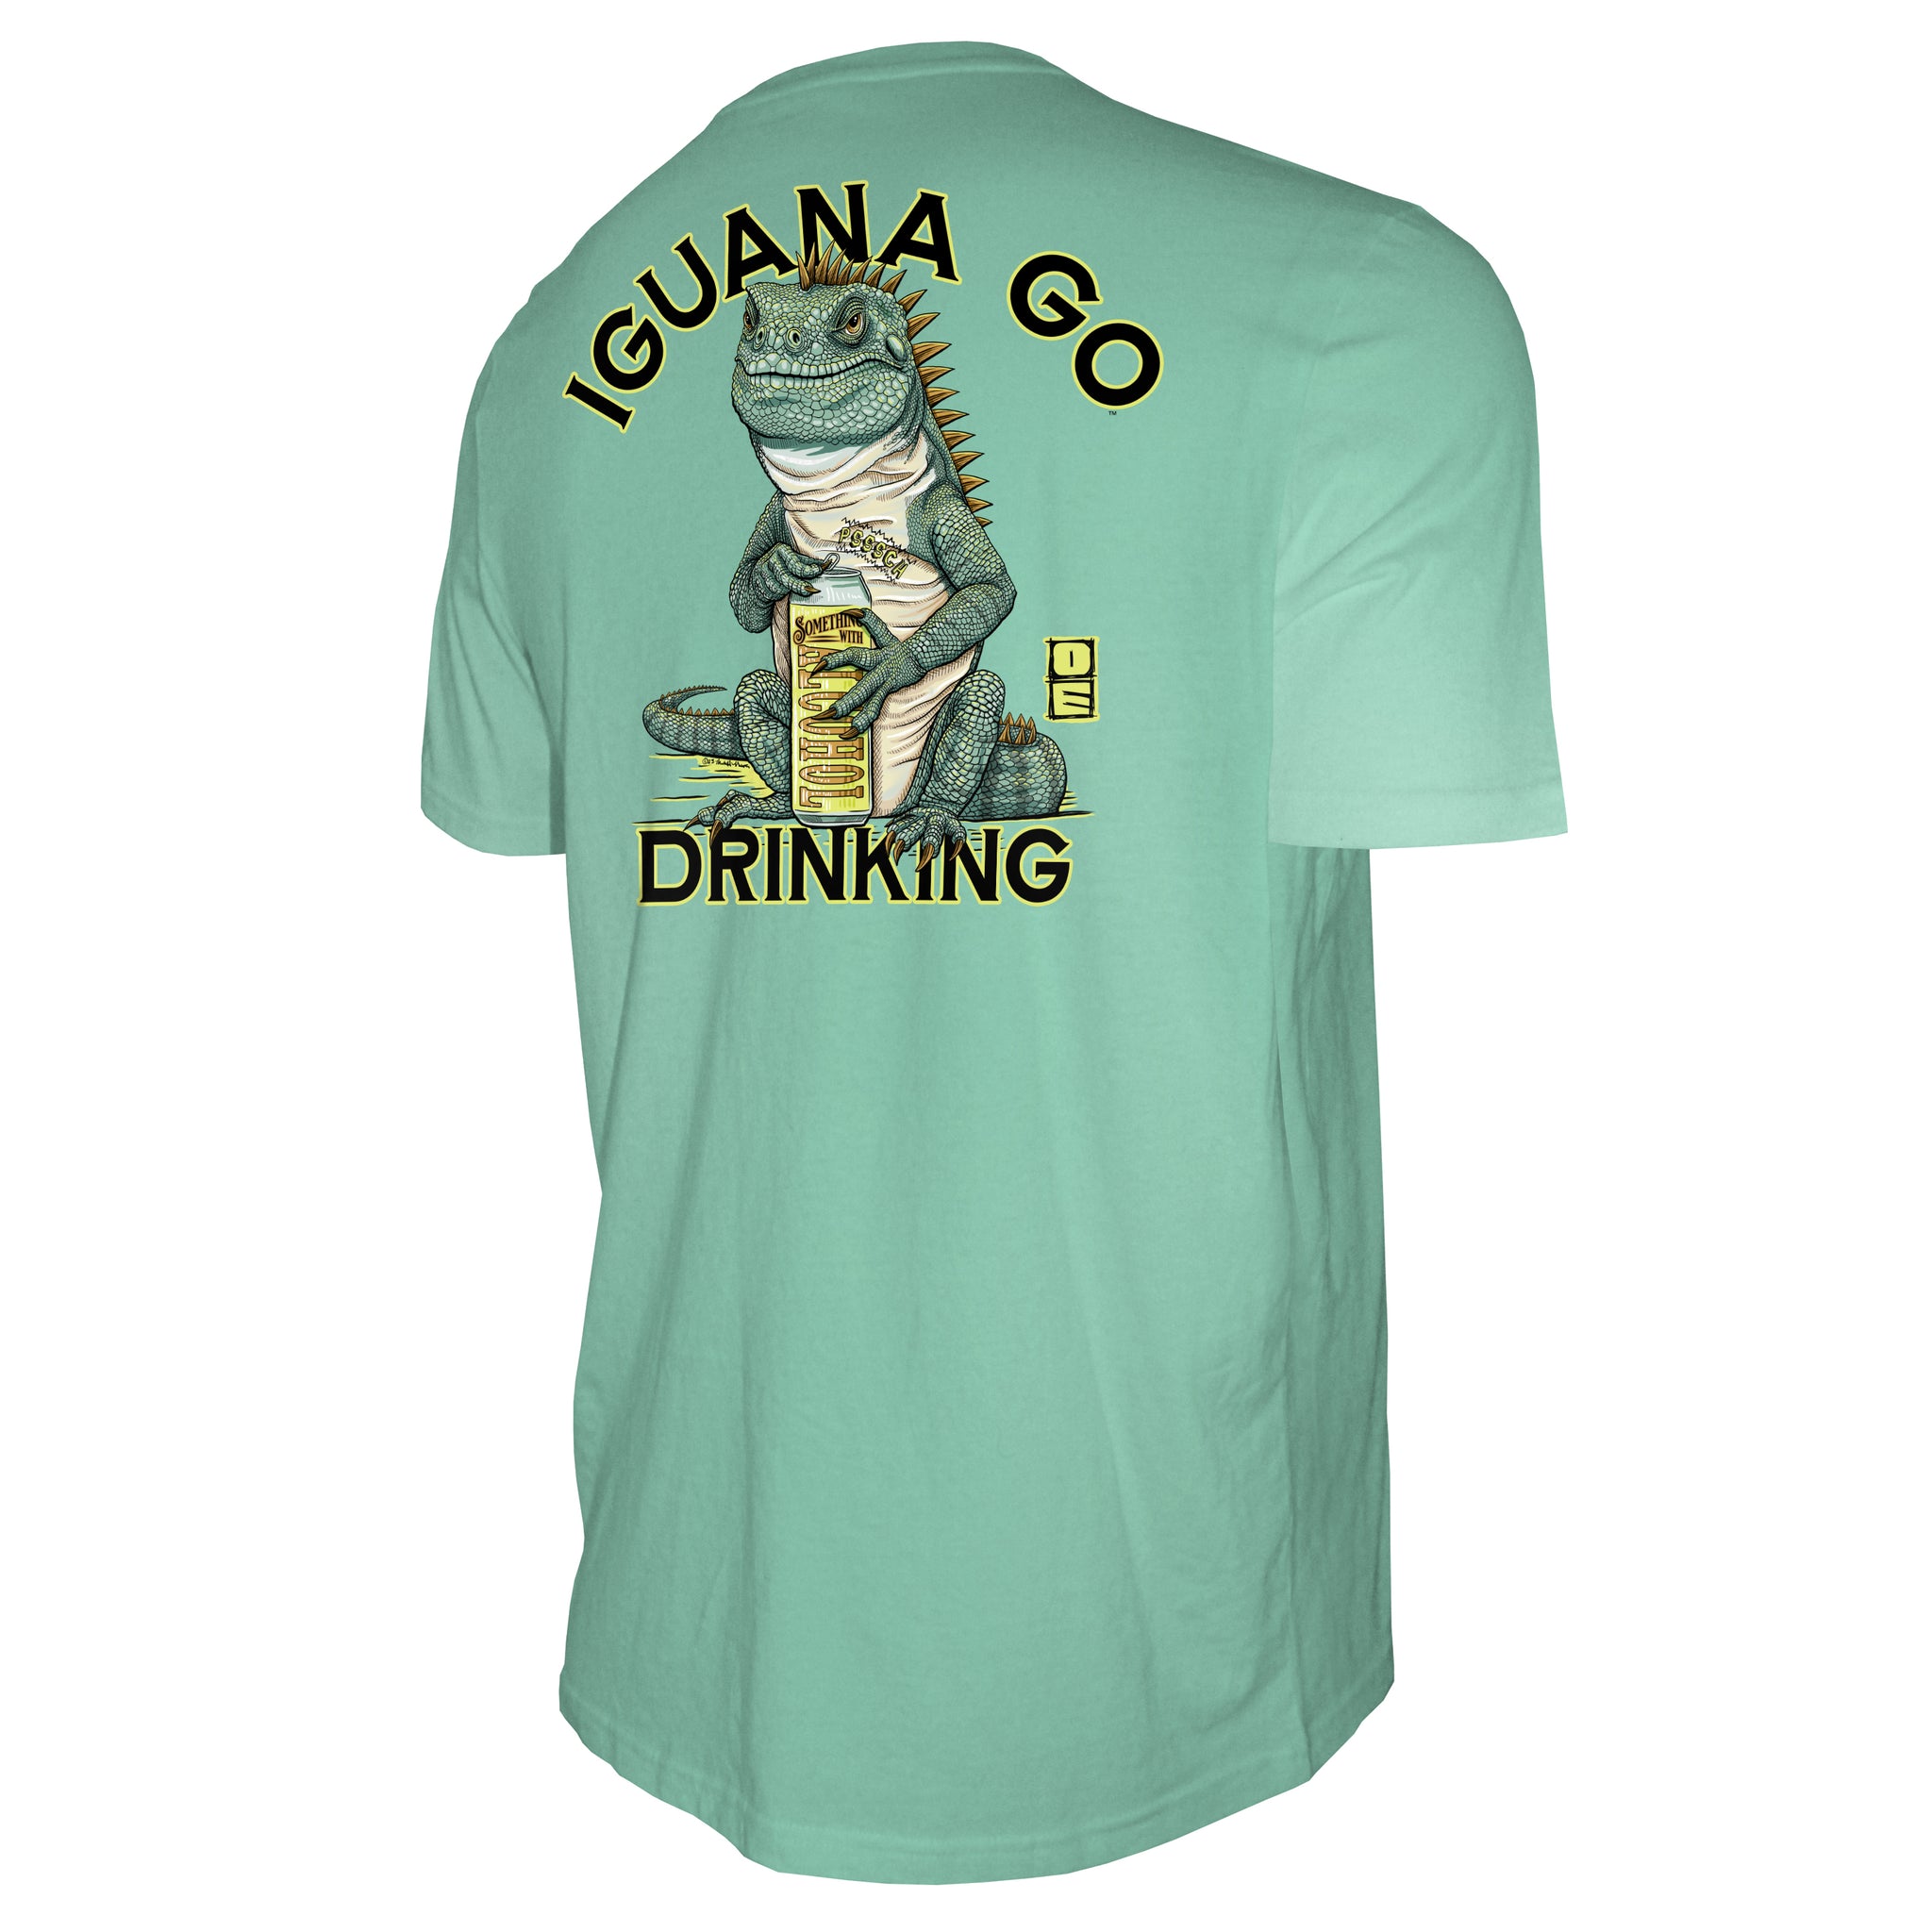 Outdoor Endeavors Attitude - American Made Tee - Iguana Go Drinking